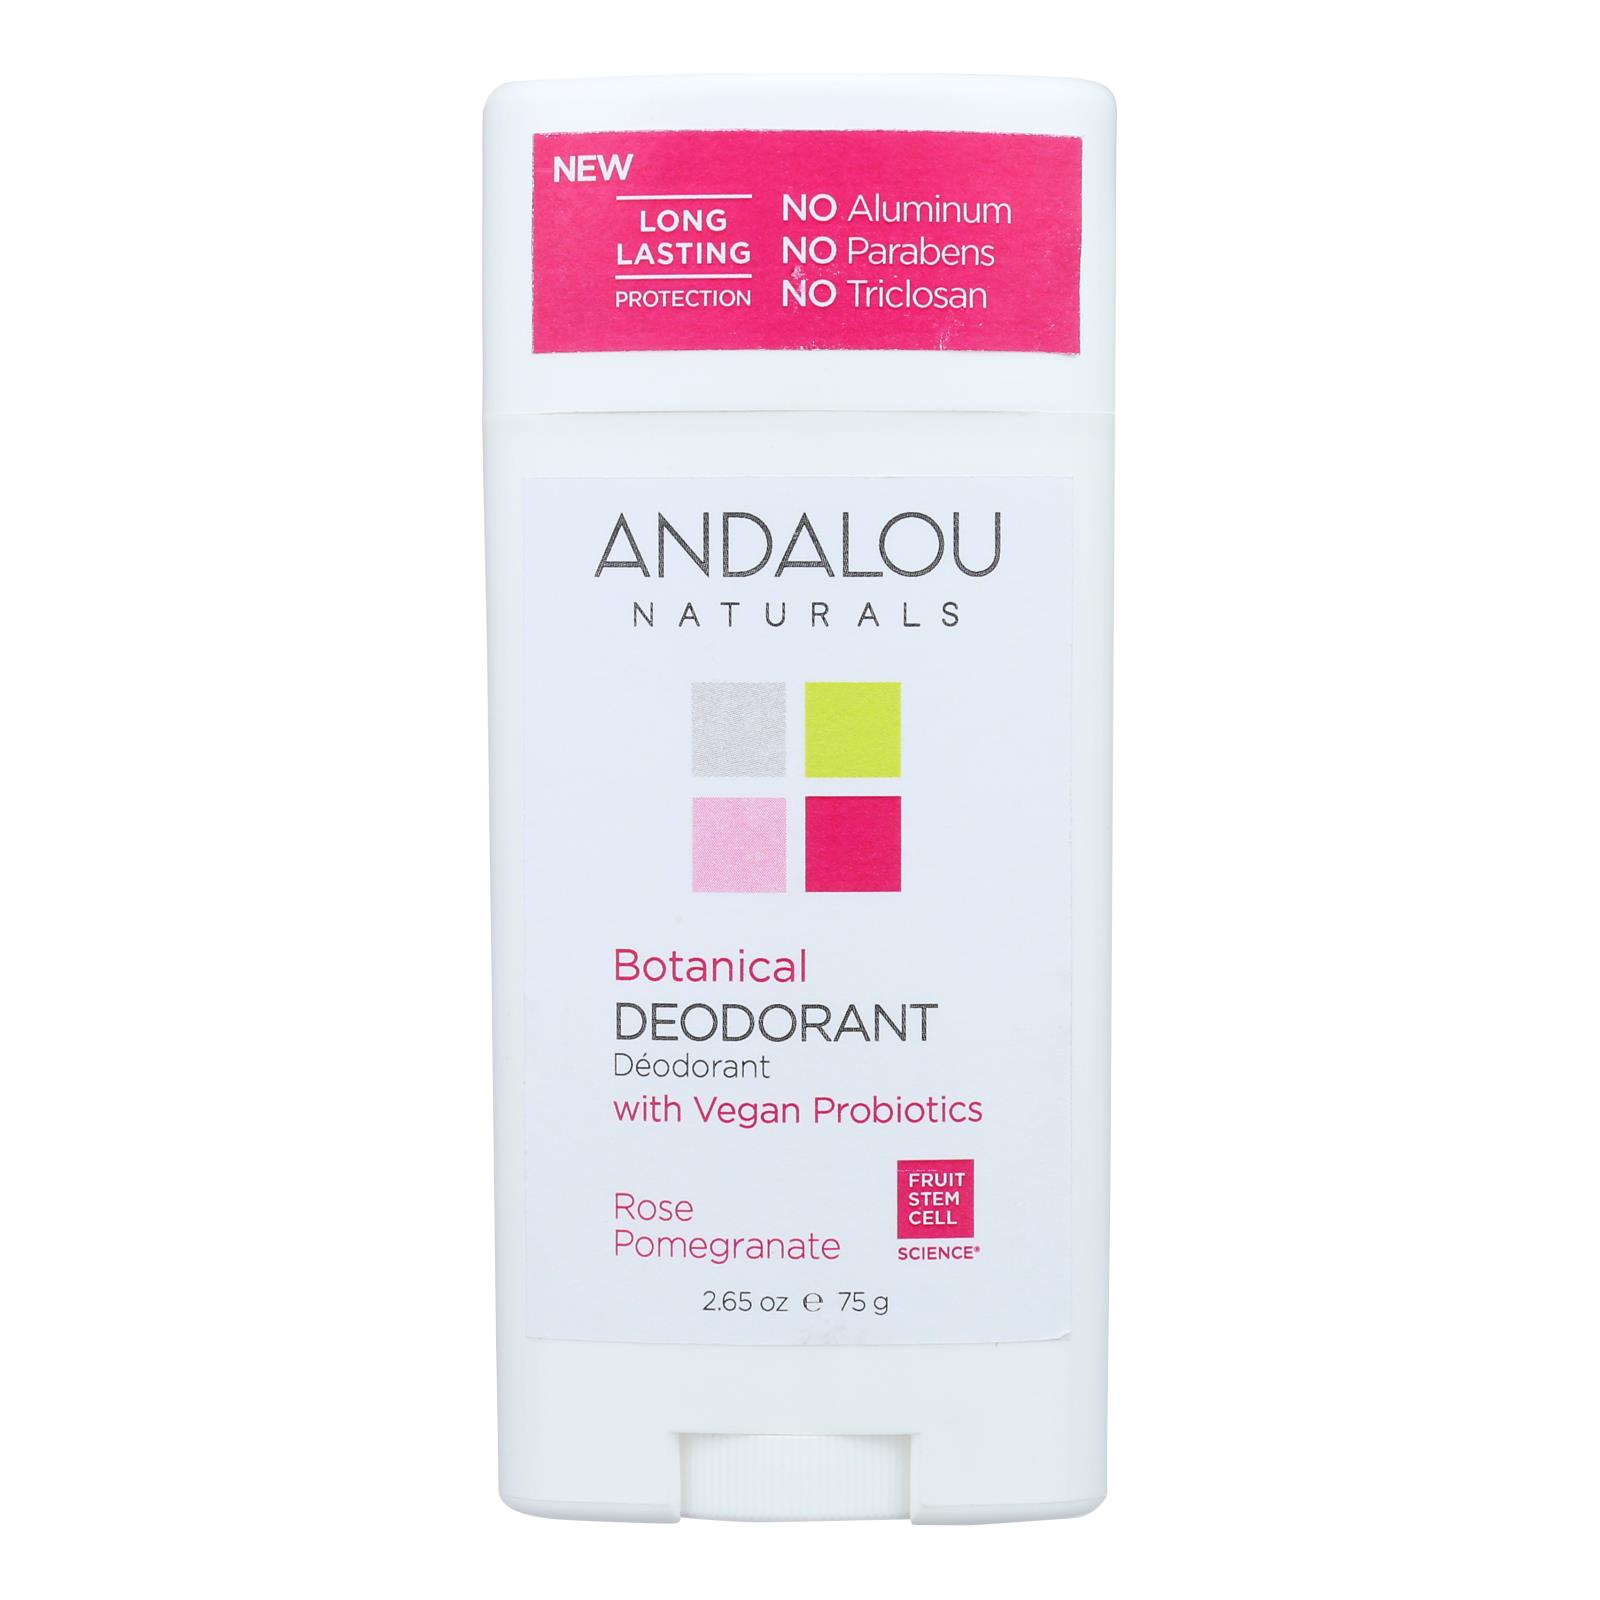 Andalou Naturals - Deodorant Vgn Pro Rose Pomegranate - 1 Each - 2.65 OZ